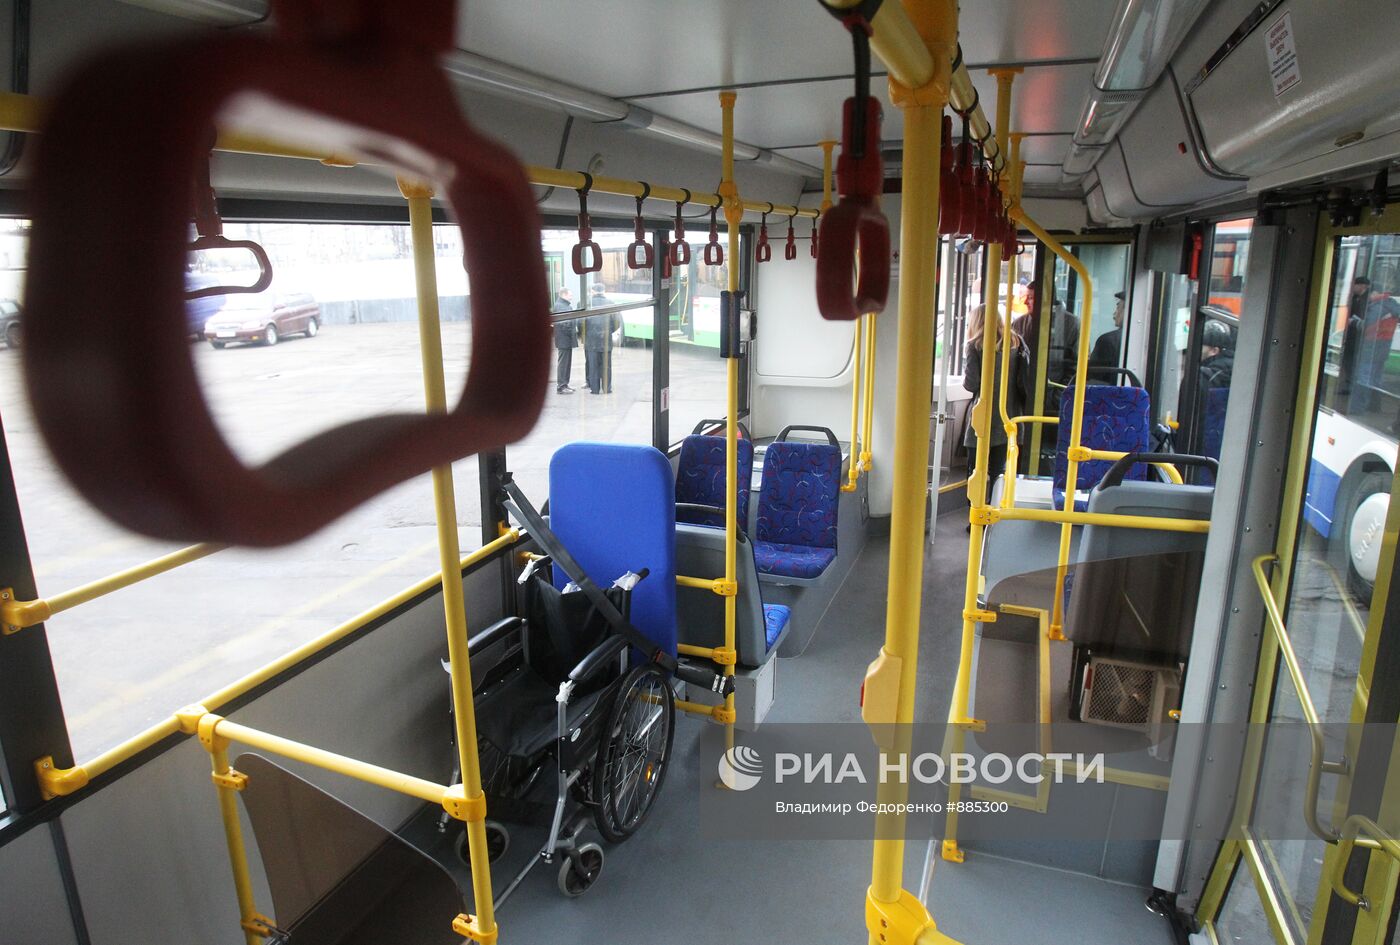 Салон низкопольного троллейбуса "СВАРЗ 6238"